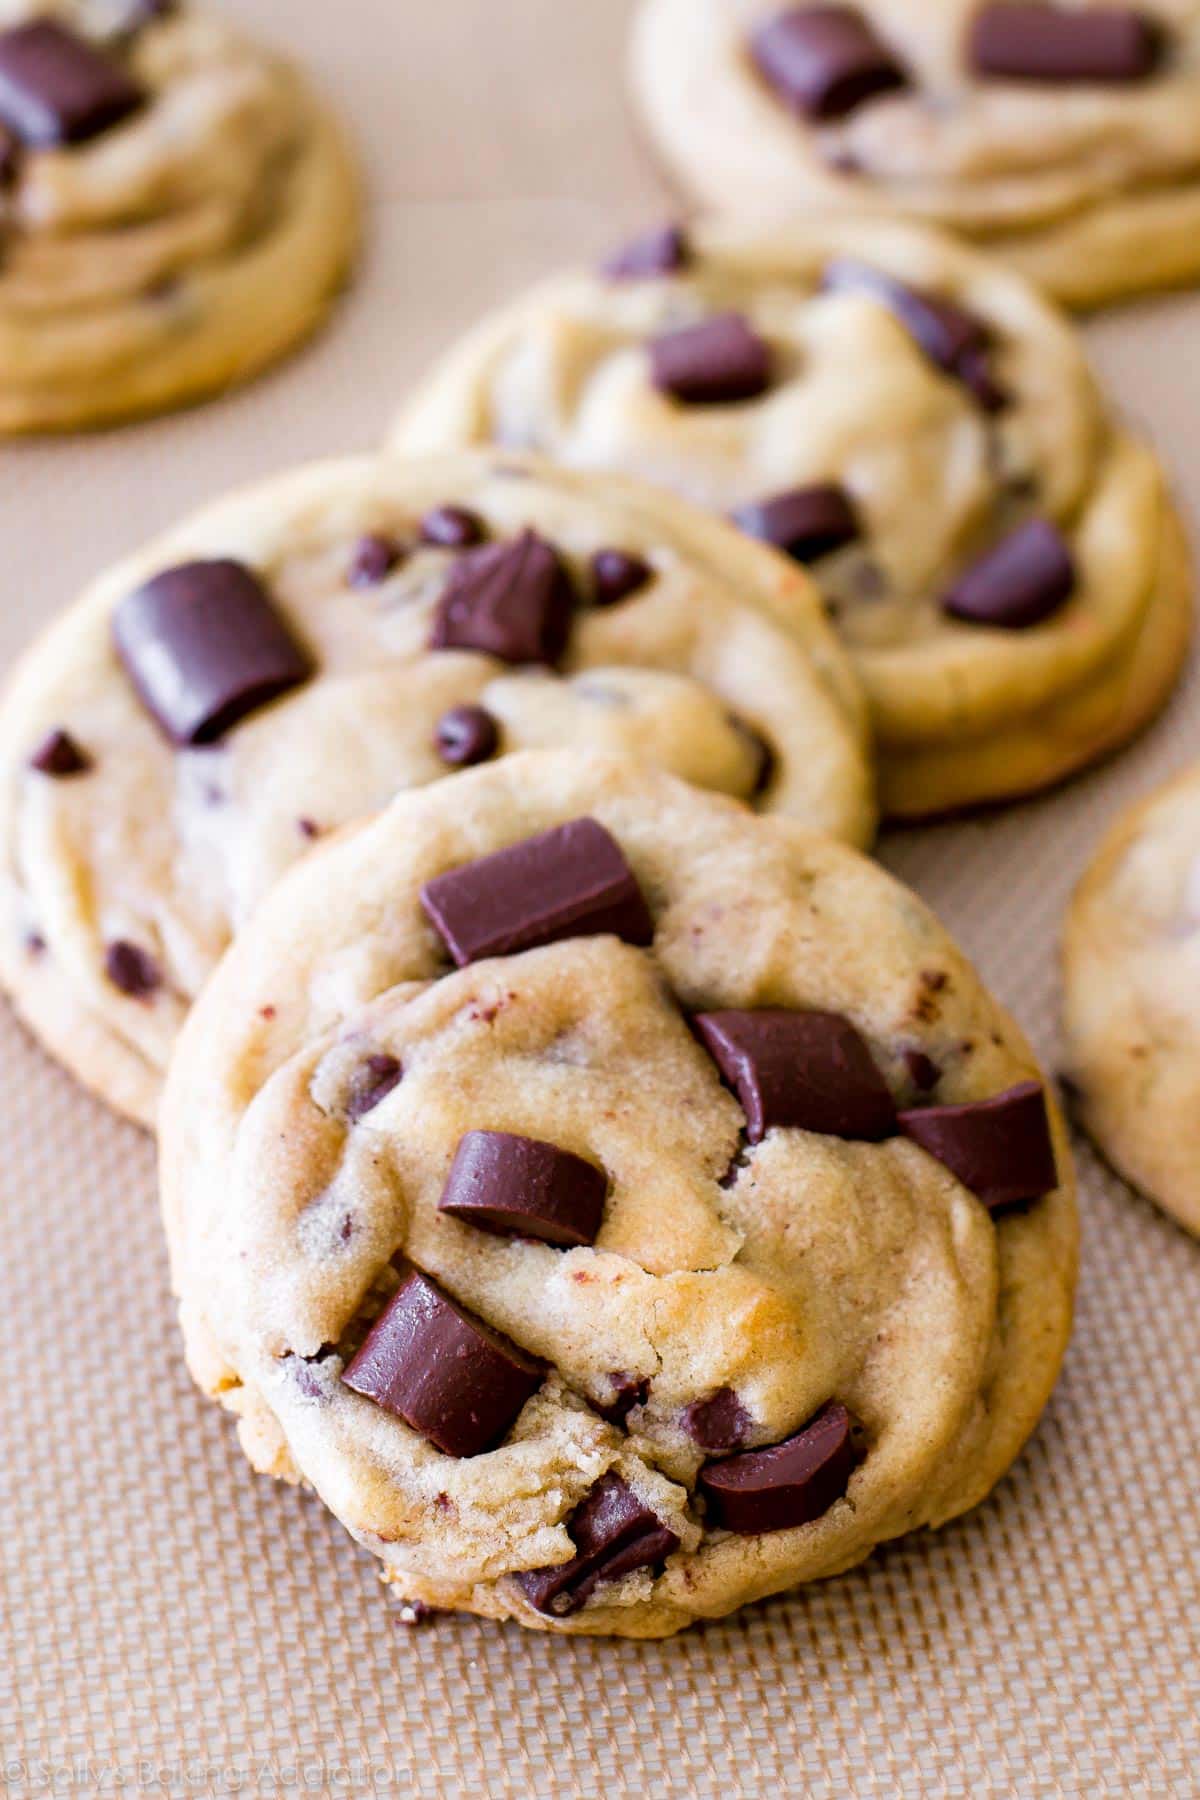 Chocolate chip cookies on baking sheet